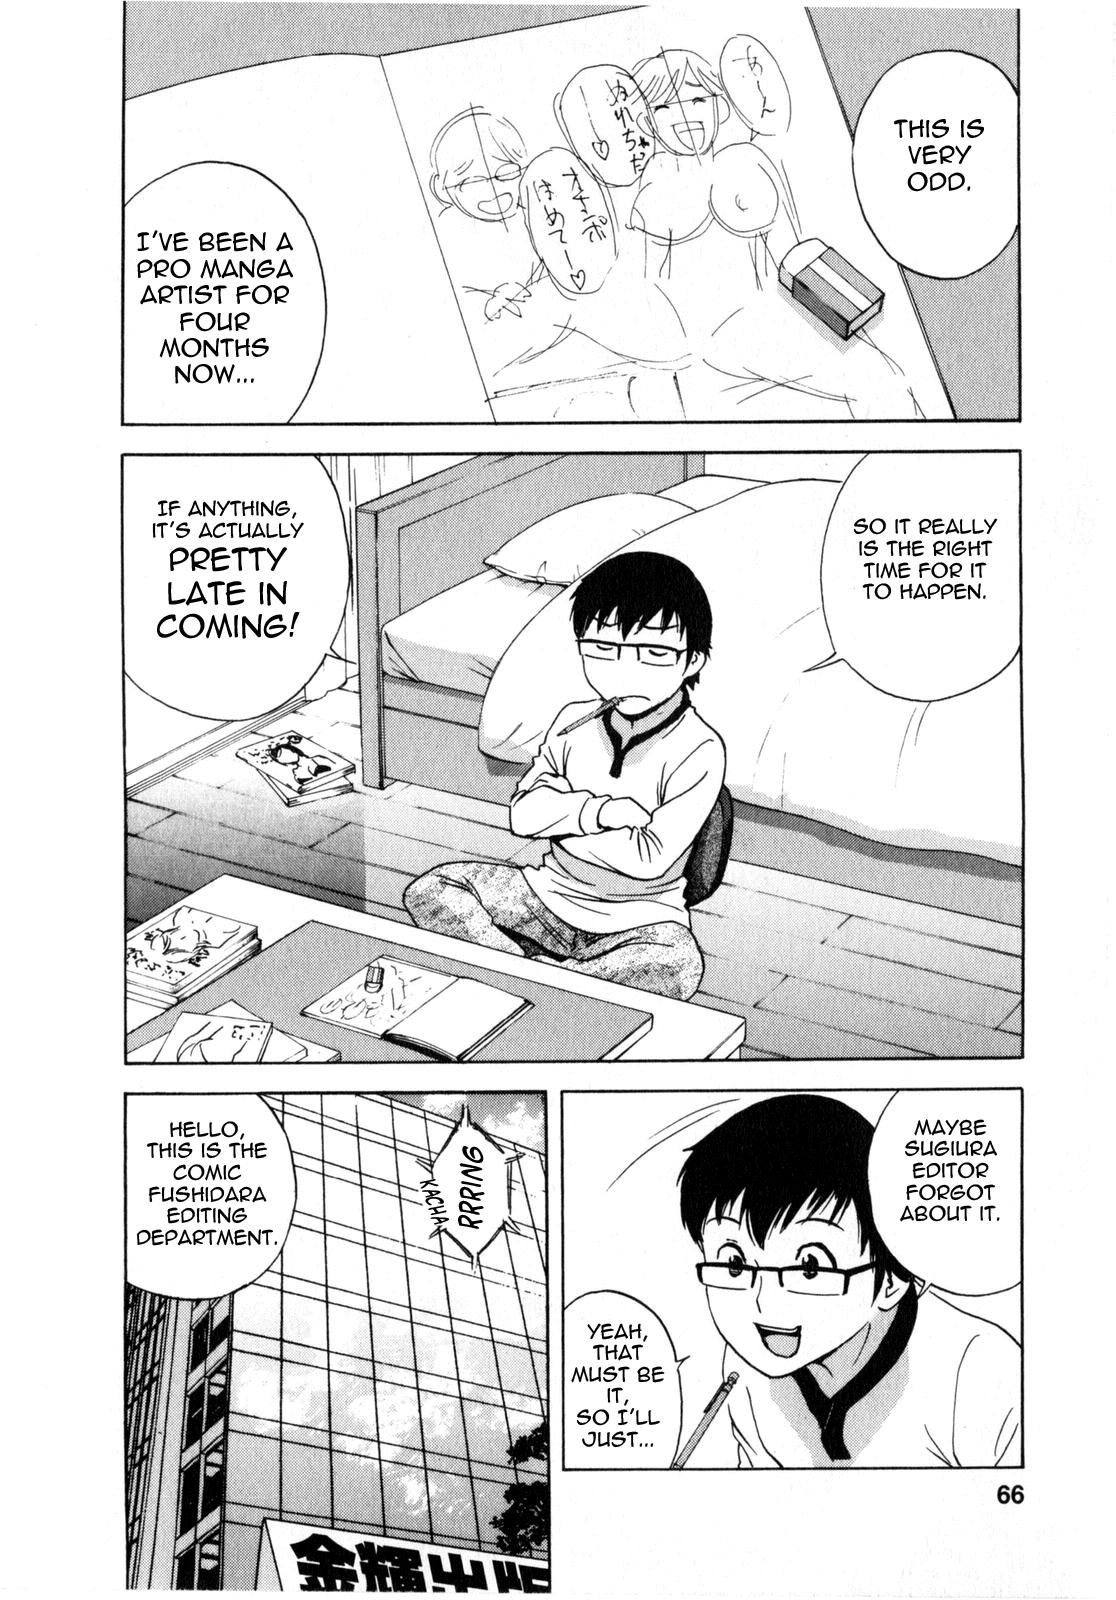 [Hidemaru] Life with Married Women Just Like a Manga 2 - Ch. 1-6 [English] {Tadanohito} 69